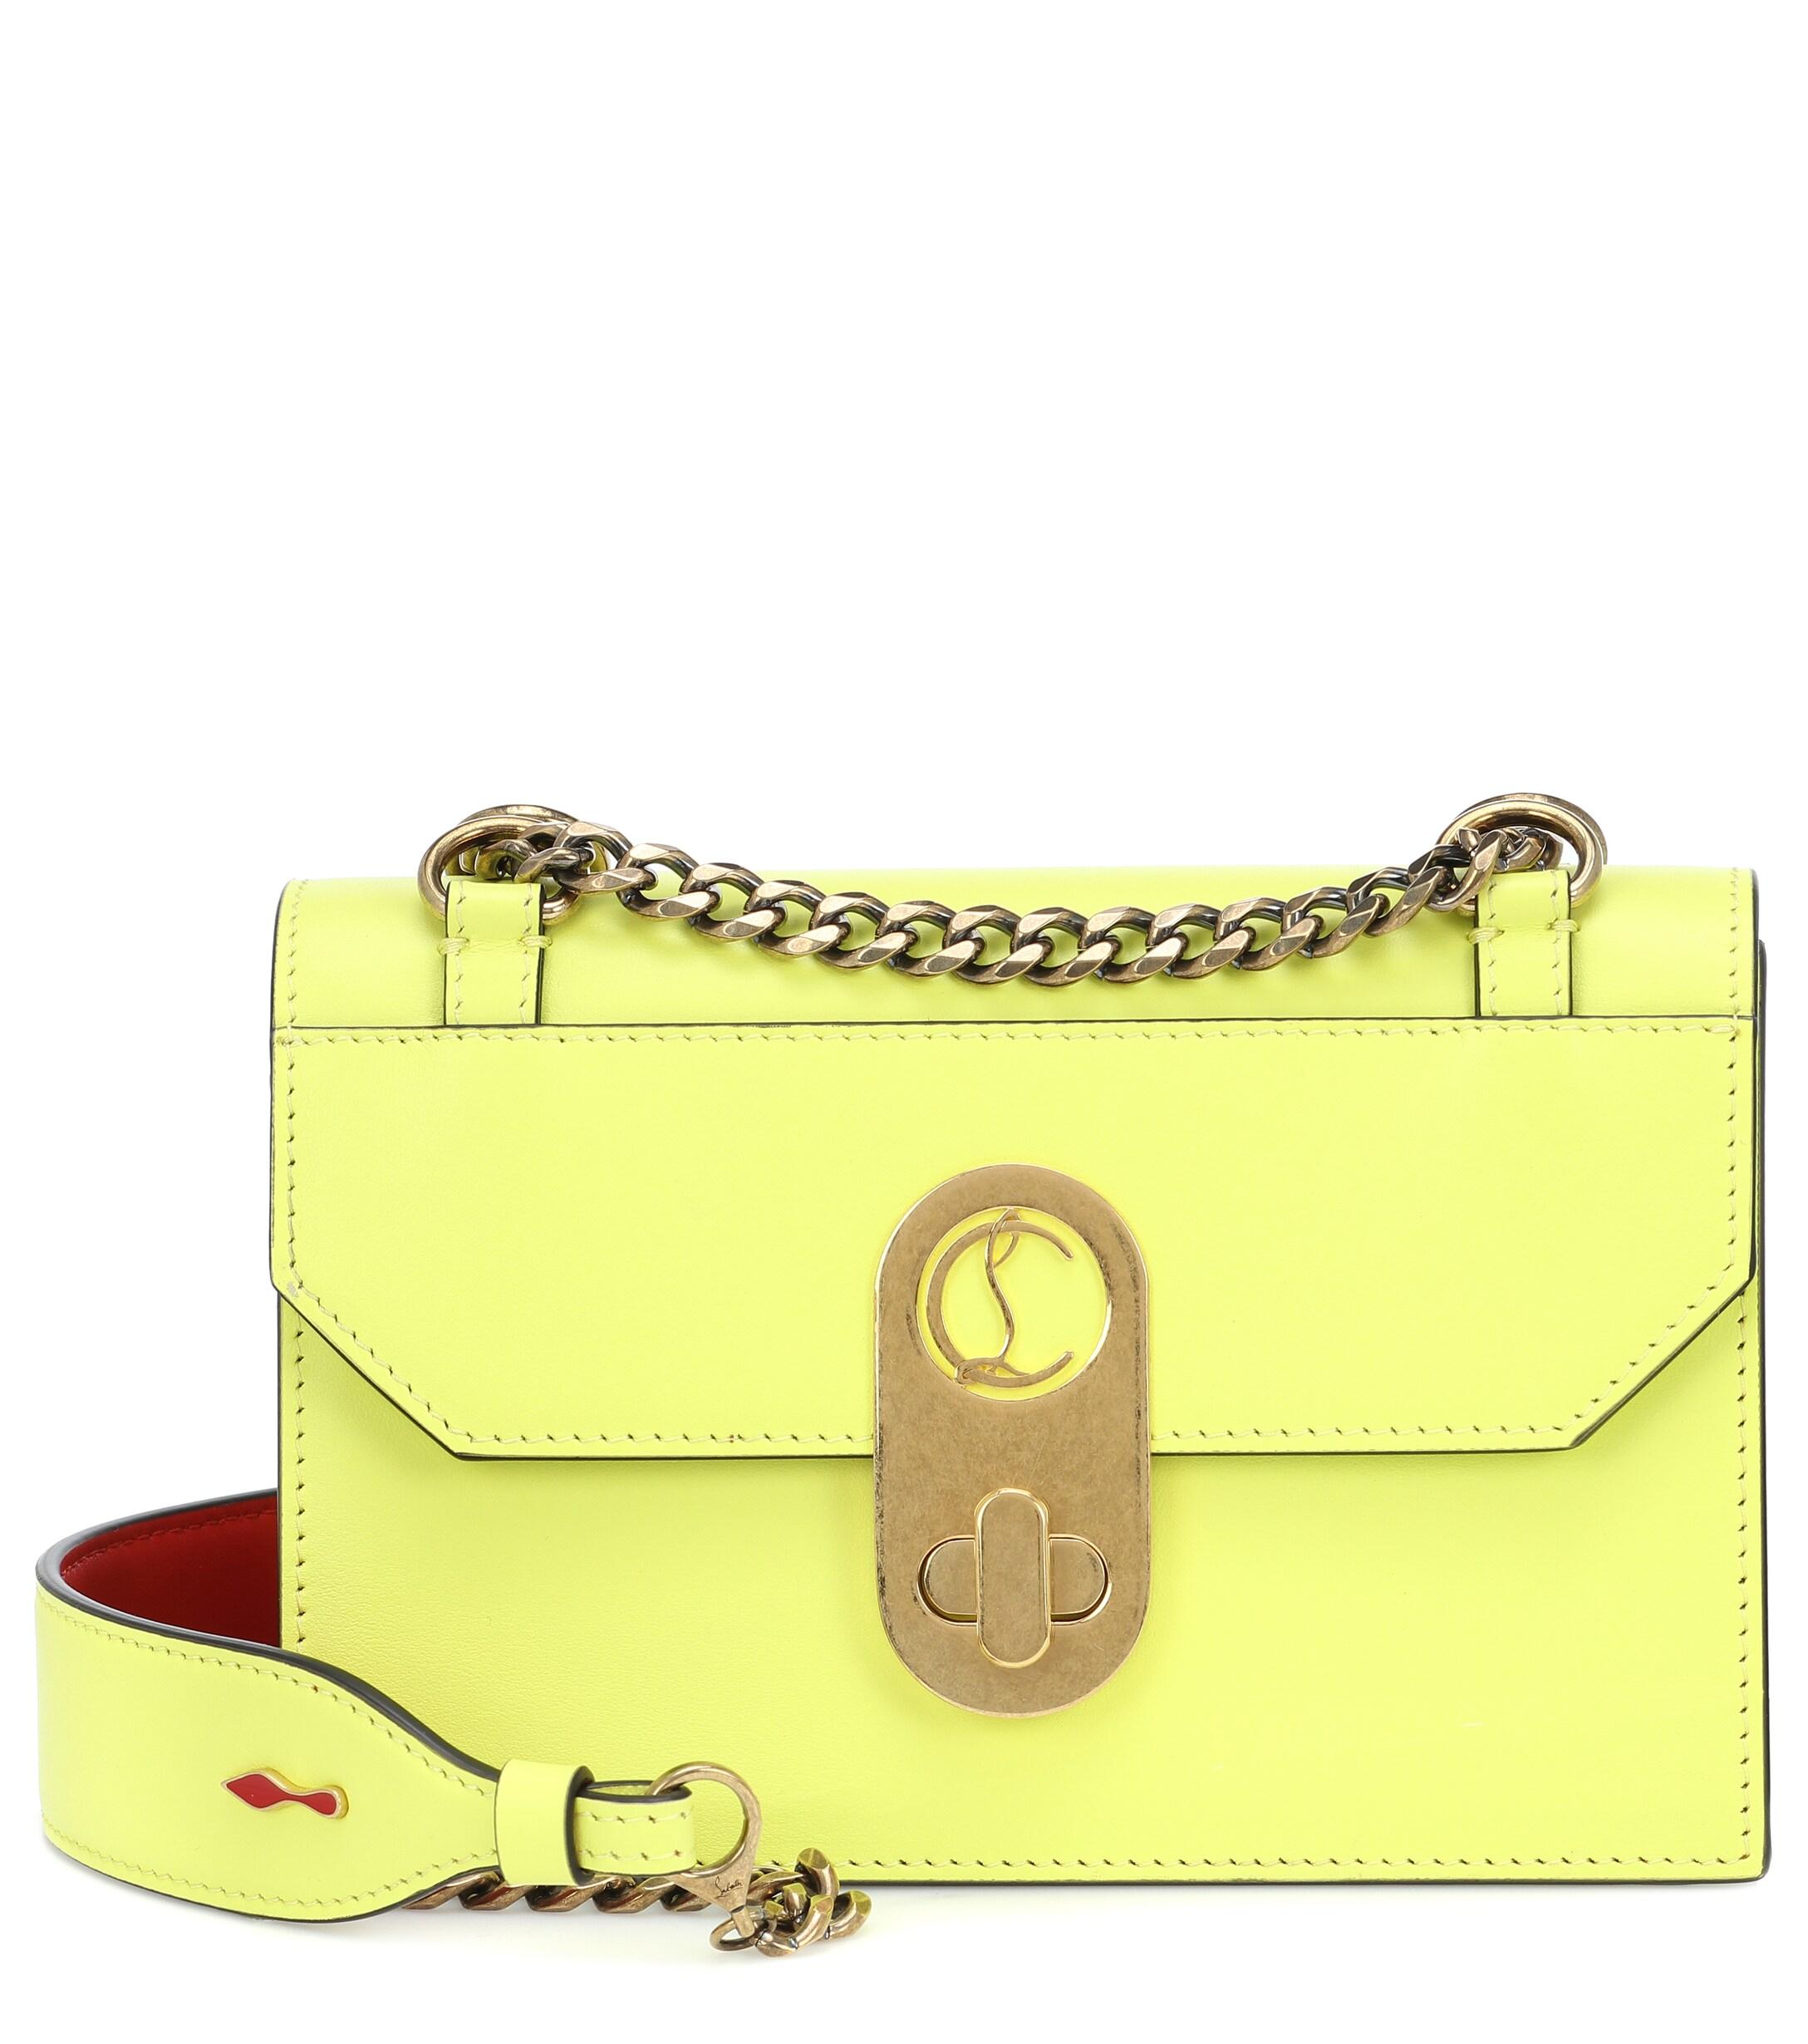 Christian Louboutin Elisa Mini Leather Shoulder Bag in Yellow | Lyst